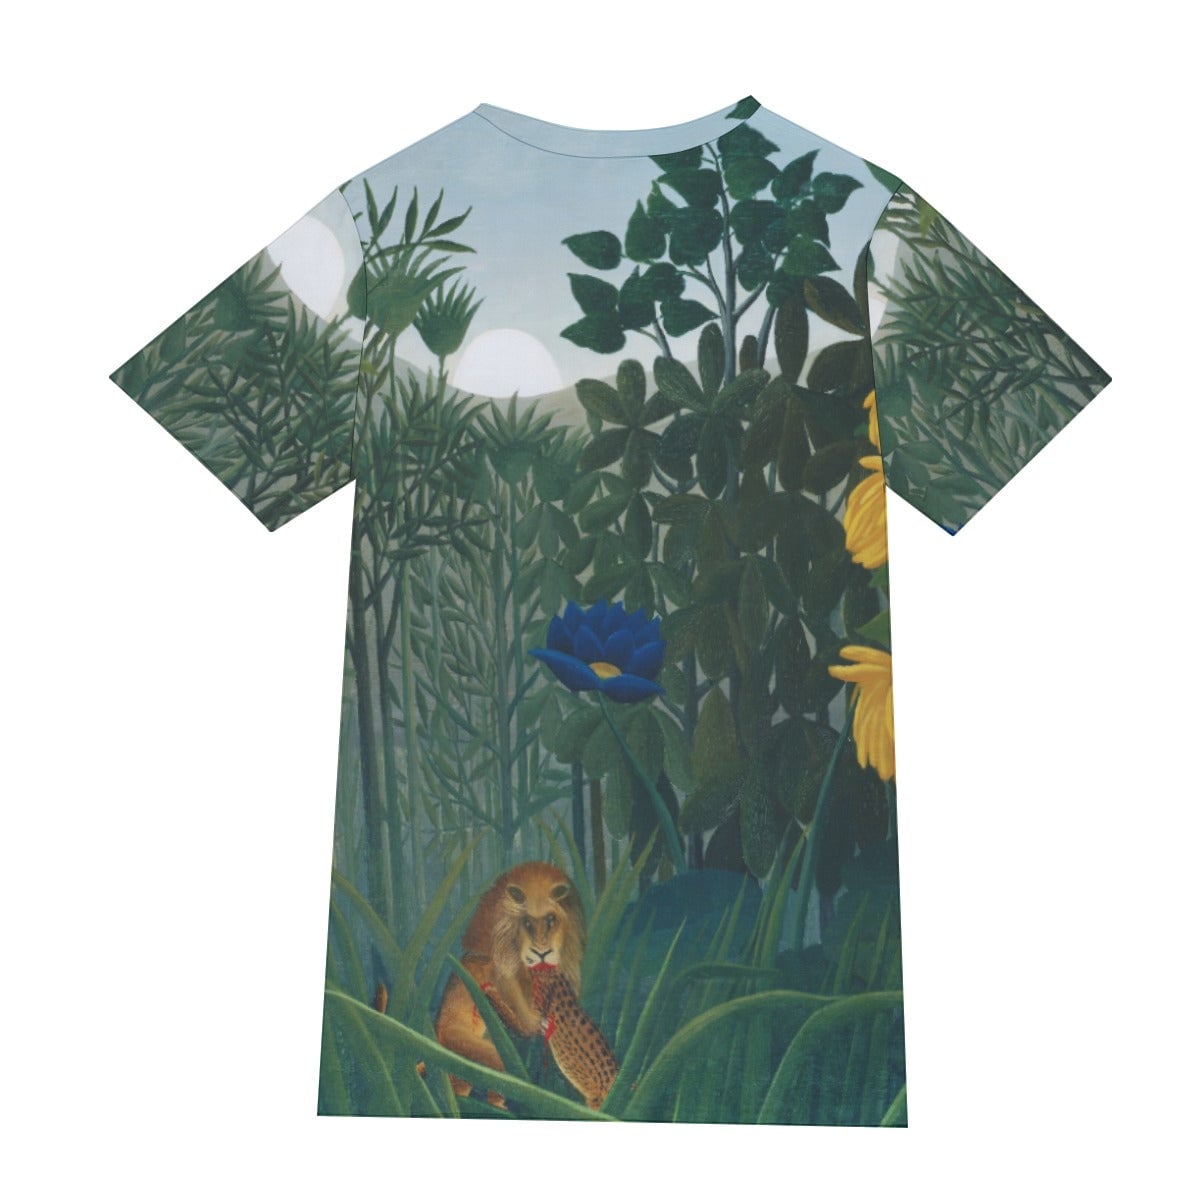 Henri Rousseau’s The Repast of the Lion T-Shirt